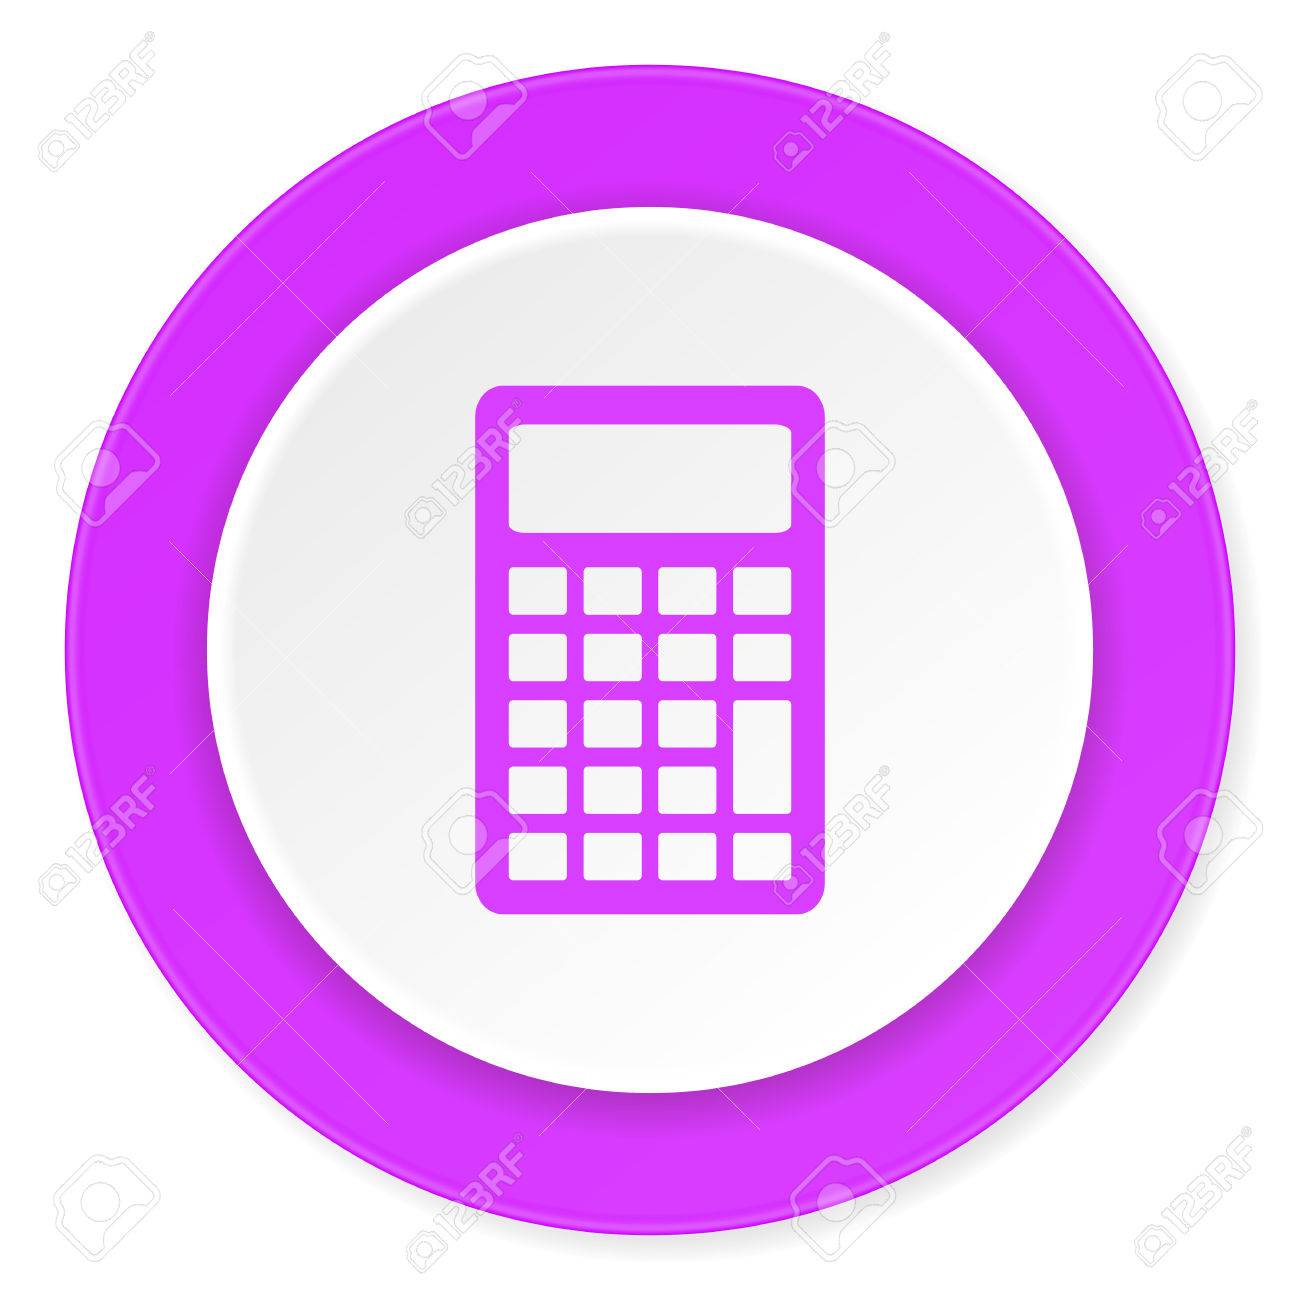 Calculator Vector Icon  Stock Vector  ahasoft #140087930